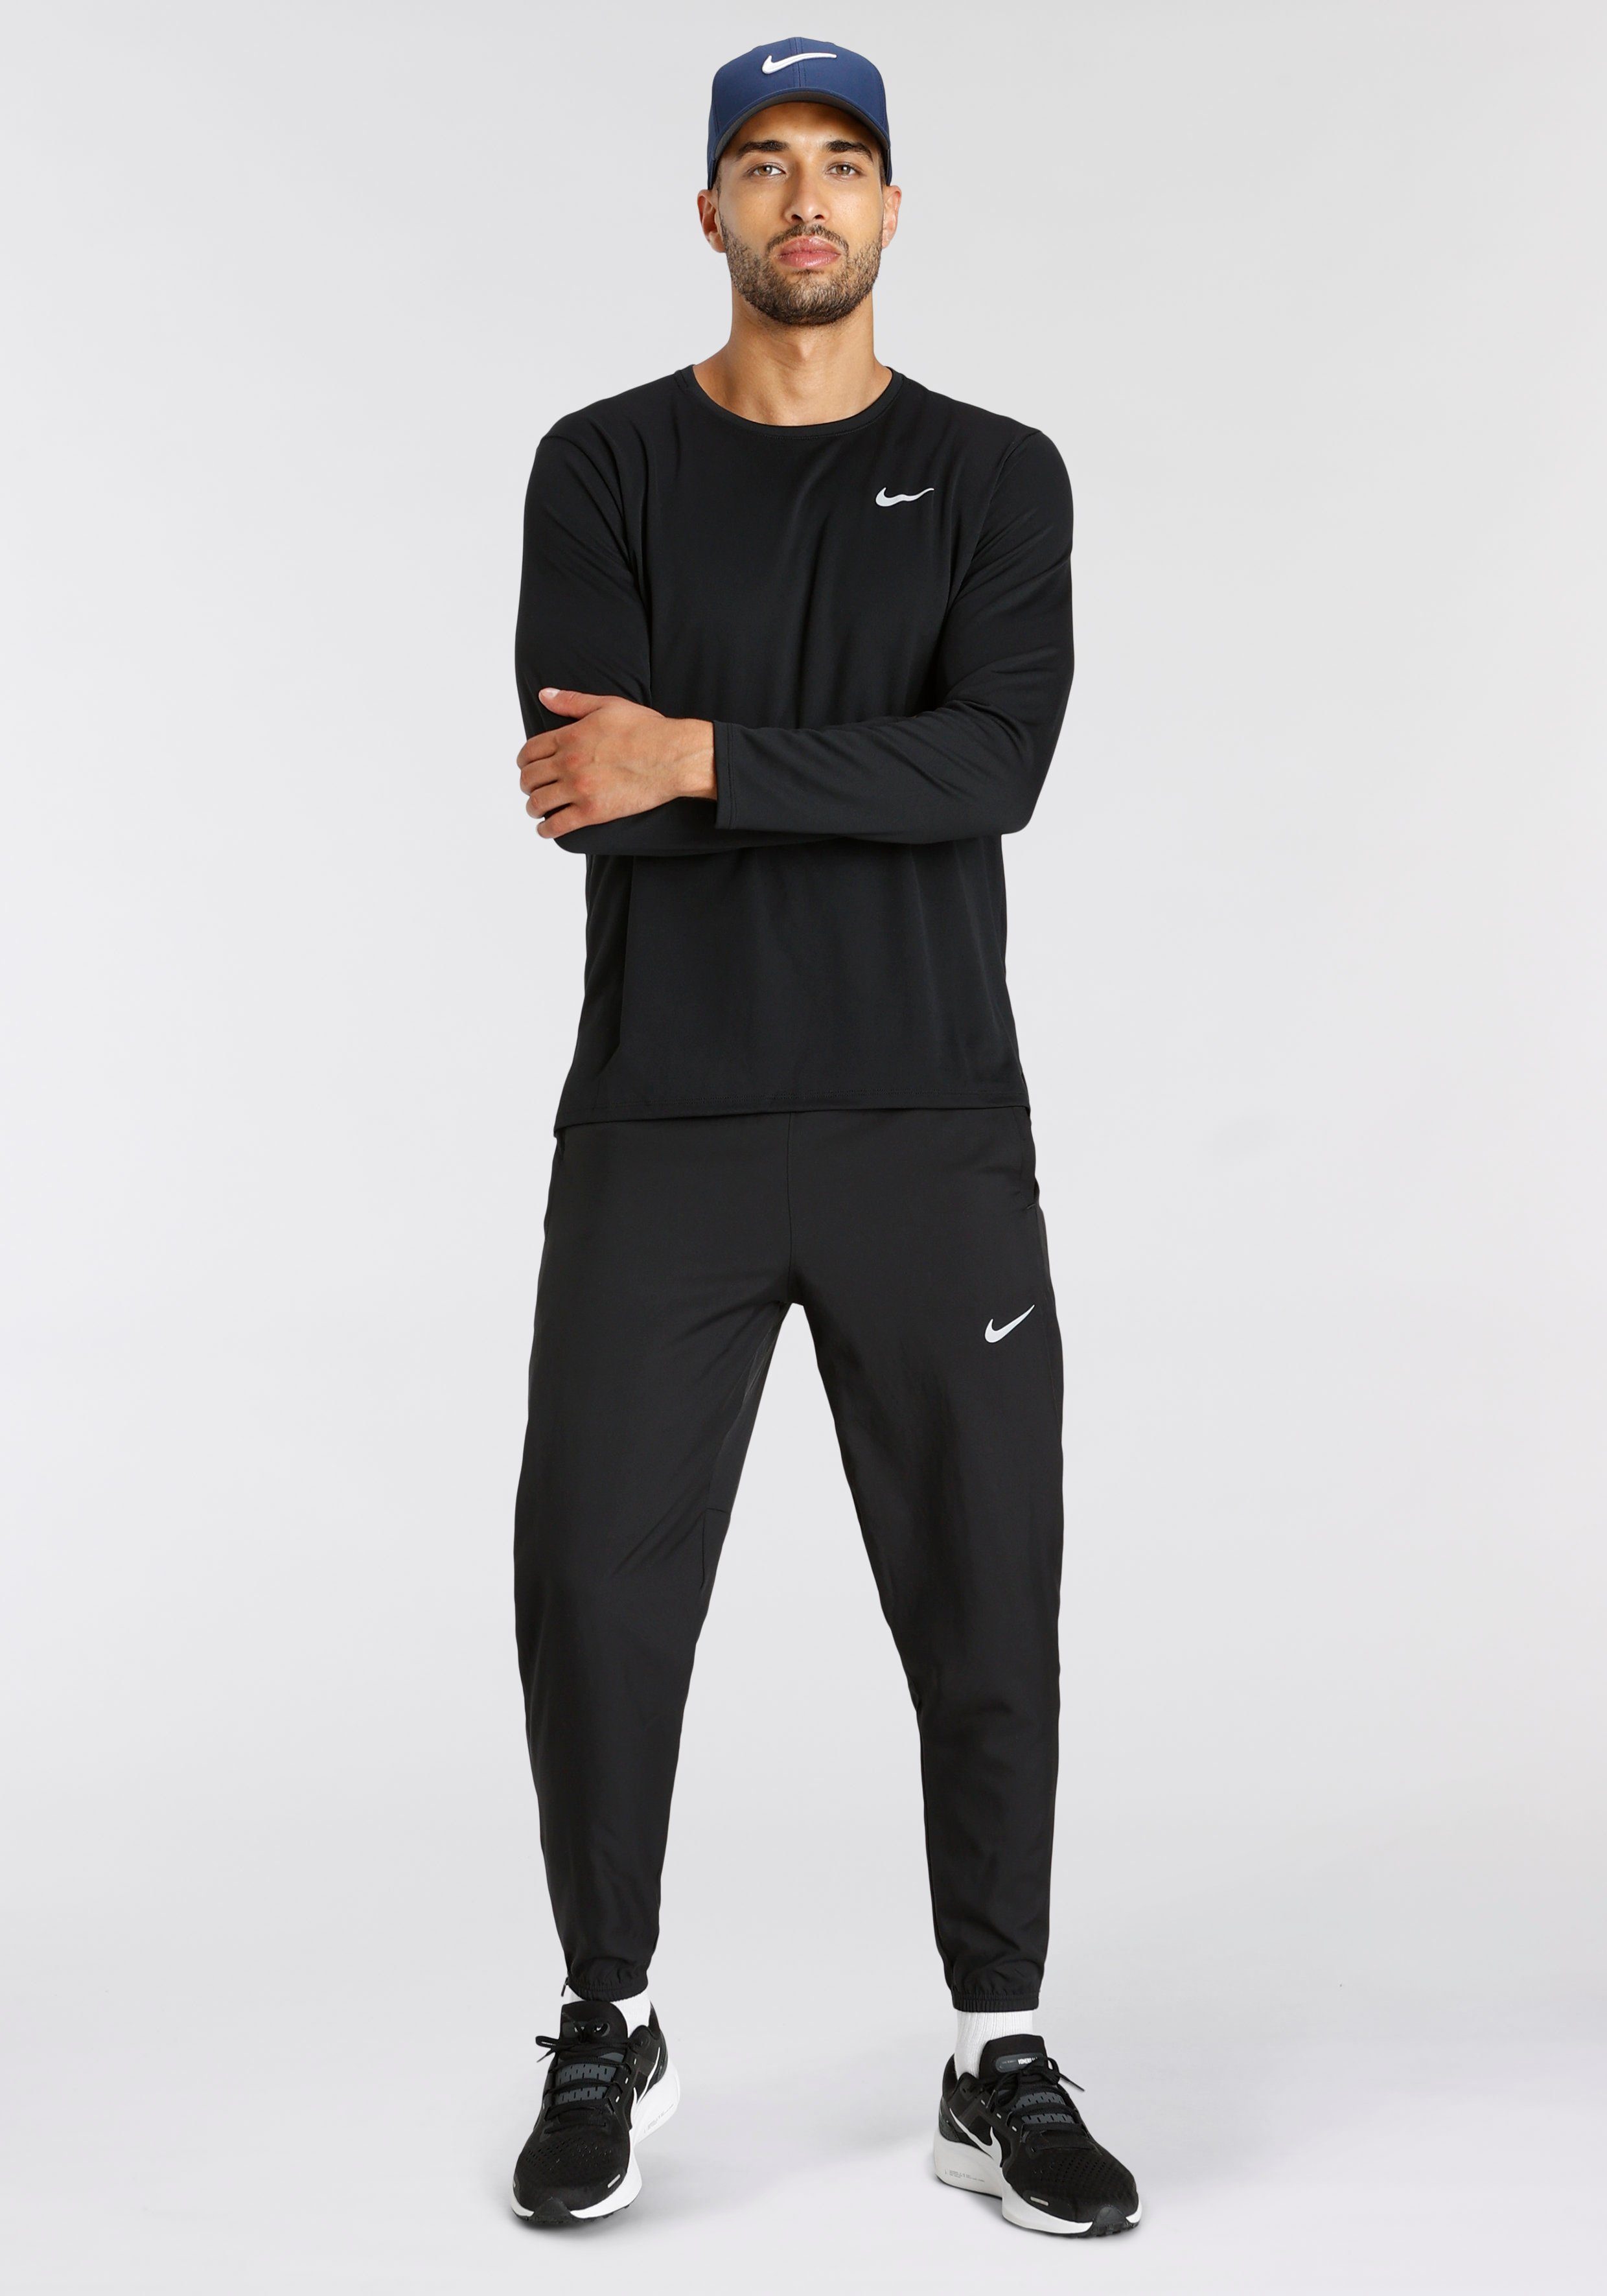 Sportbekleidung Nike » Nike | Mode kaufen Sportliche OTTO